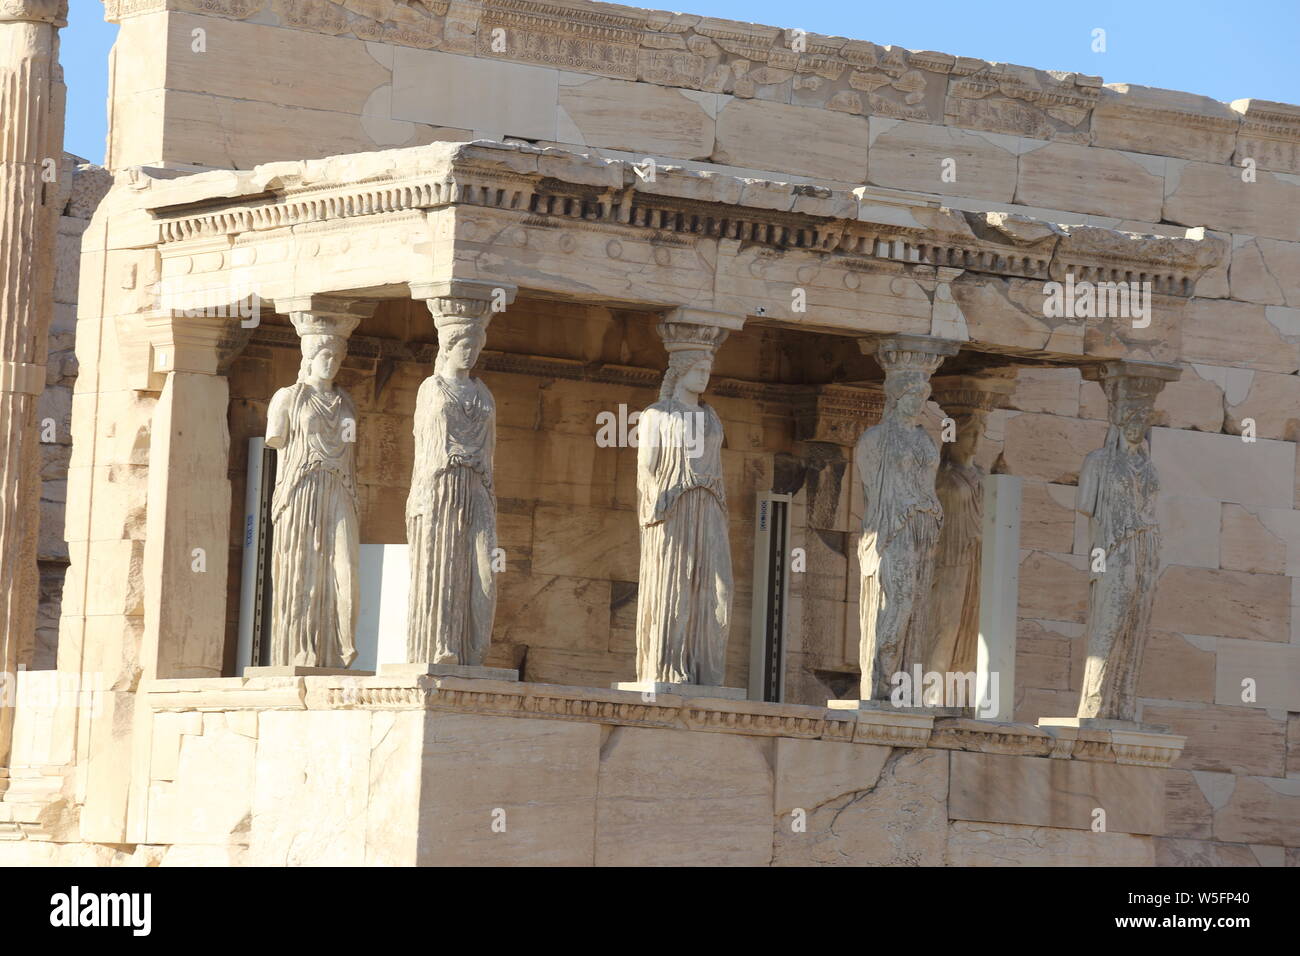 Athens, Greece - July 20, 2019: The Parthenon on the Acropolis of Athens, a UNESCO heritage site Stock Photo